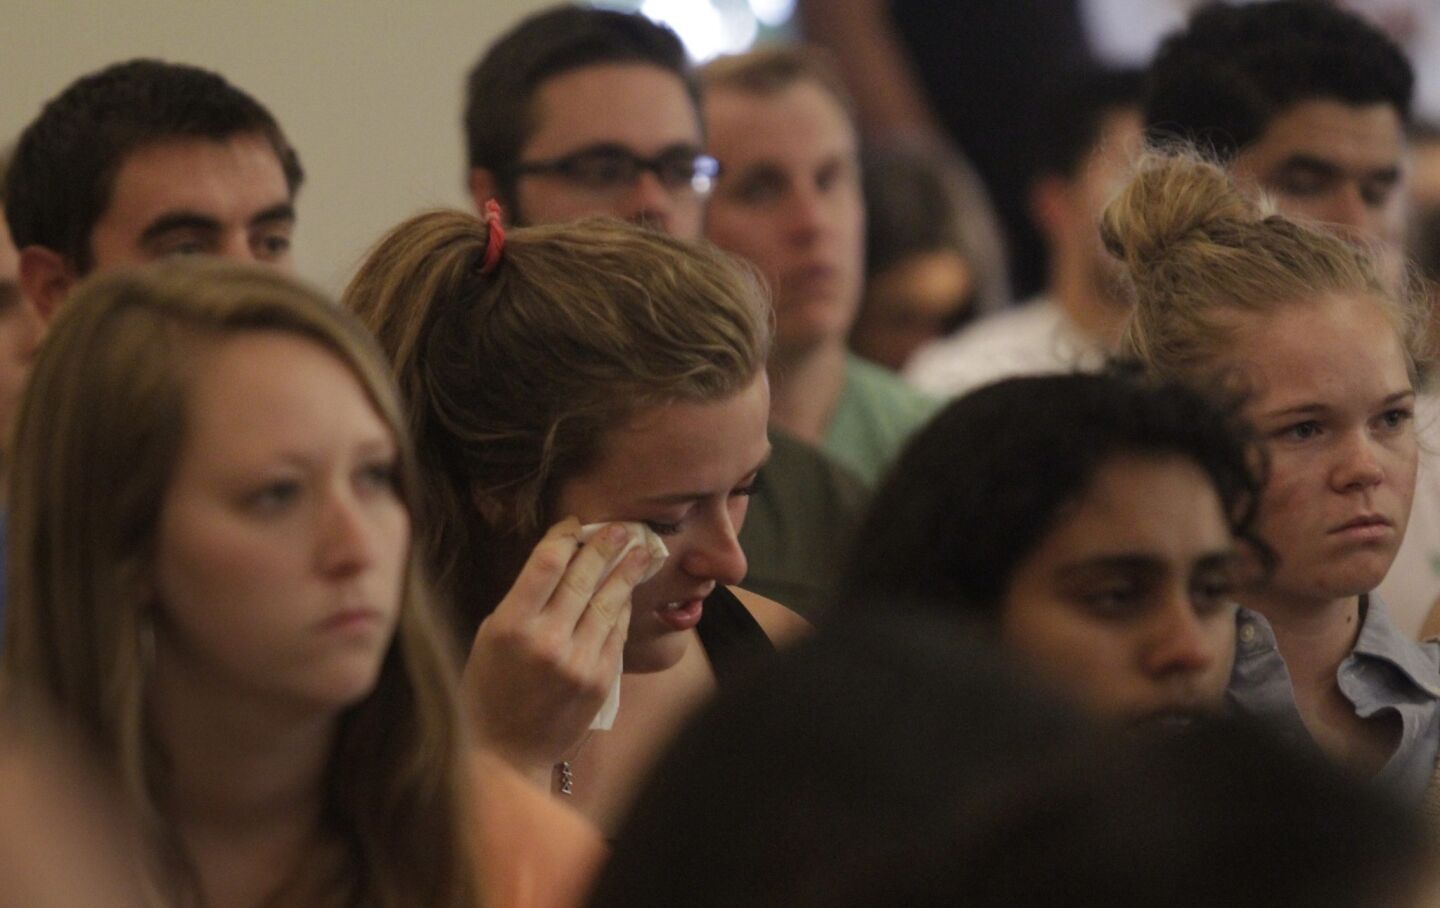 A congregant reacts during Mass at St. Mark's University Parish in honor of the UC Santa Barbara victims.